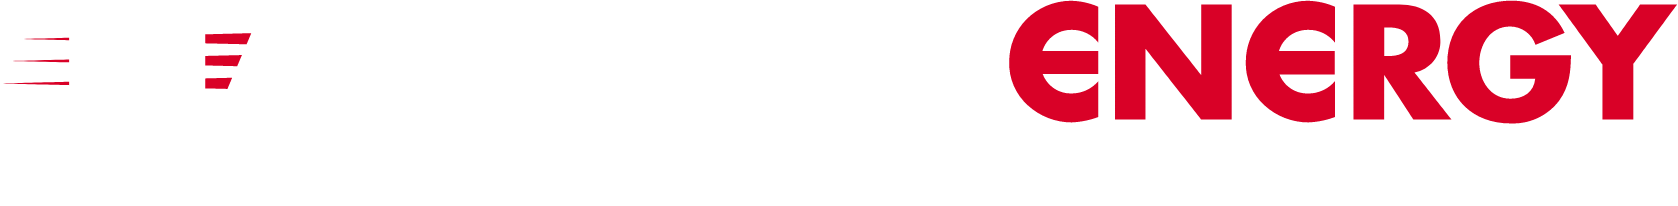 CONSOL Energy logo large for dark backgrounds (transparent PNG)